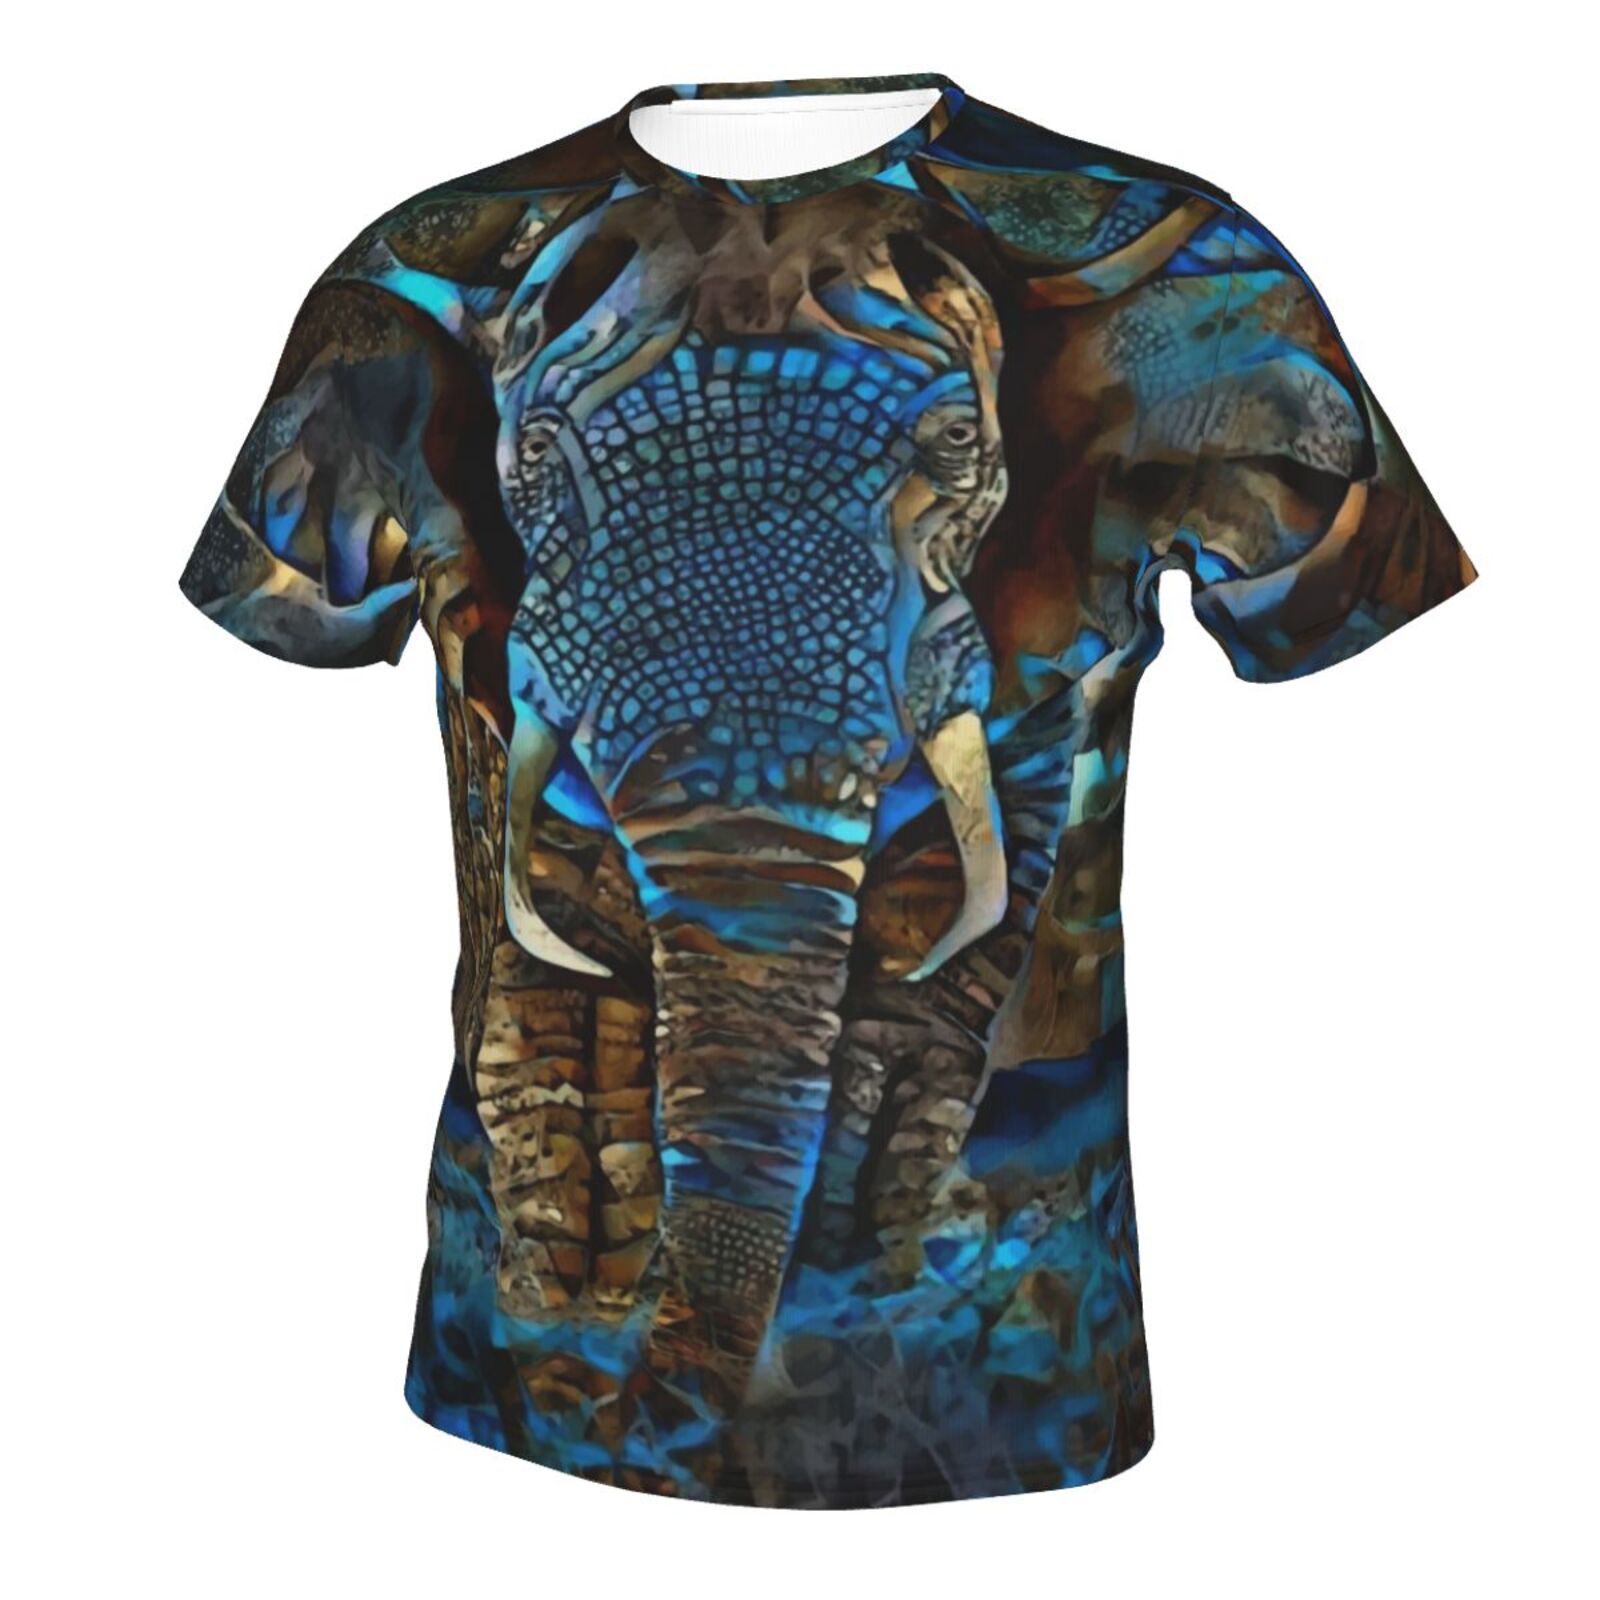 Camiseta Argentina Clásica Elefante Marrón Azul Elementos De Técnica Mixta